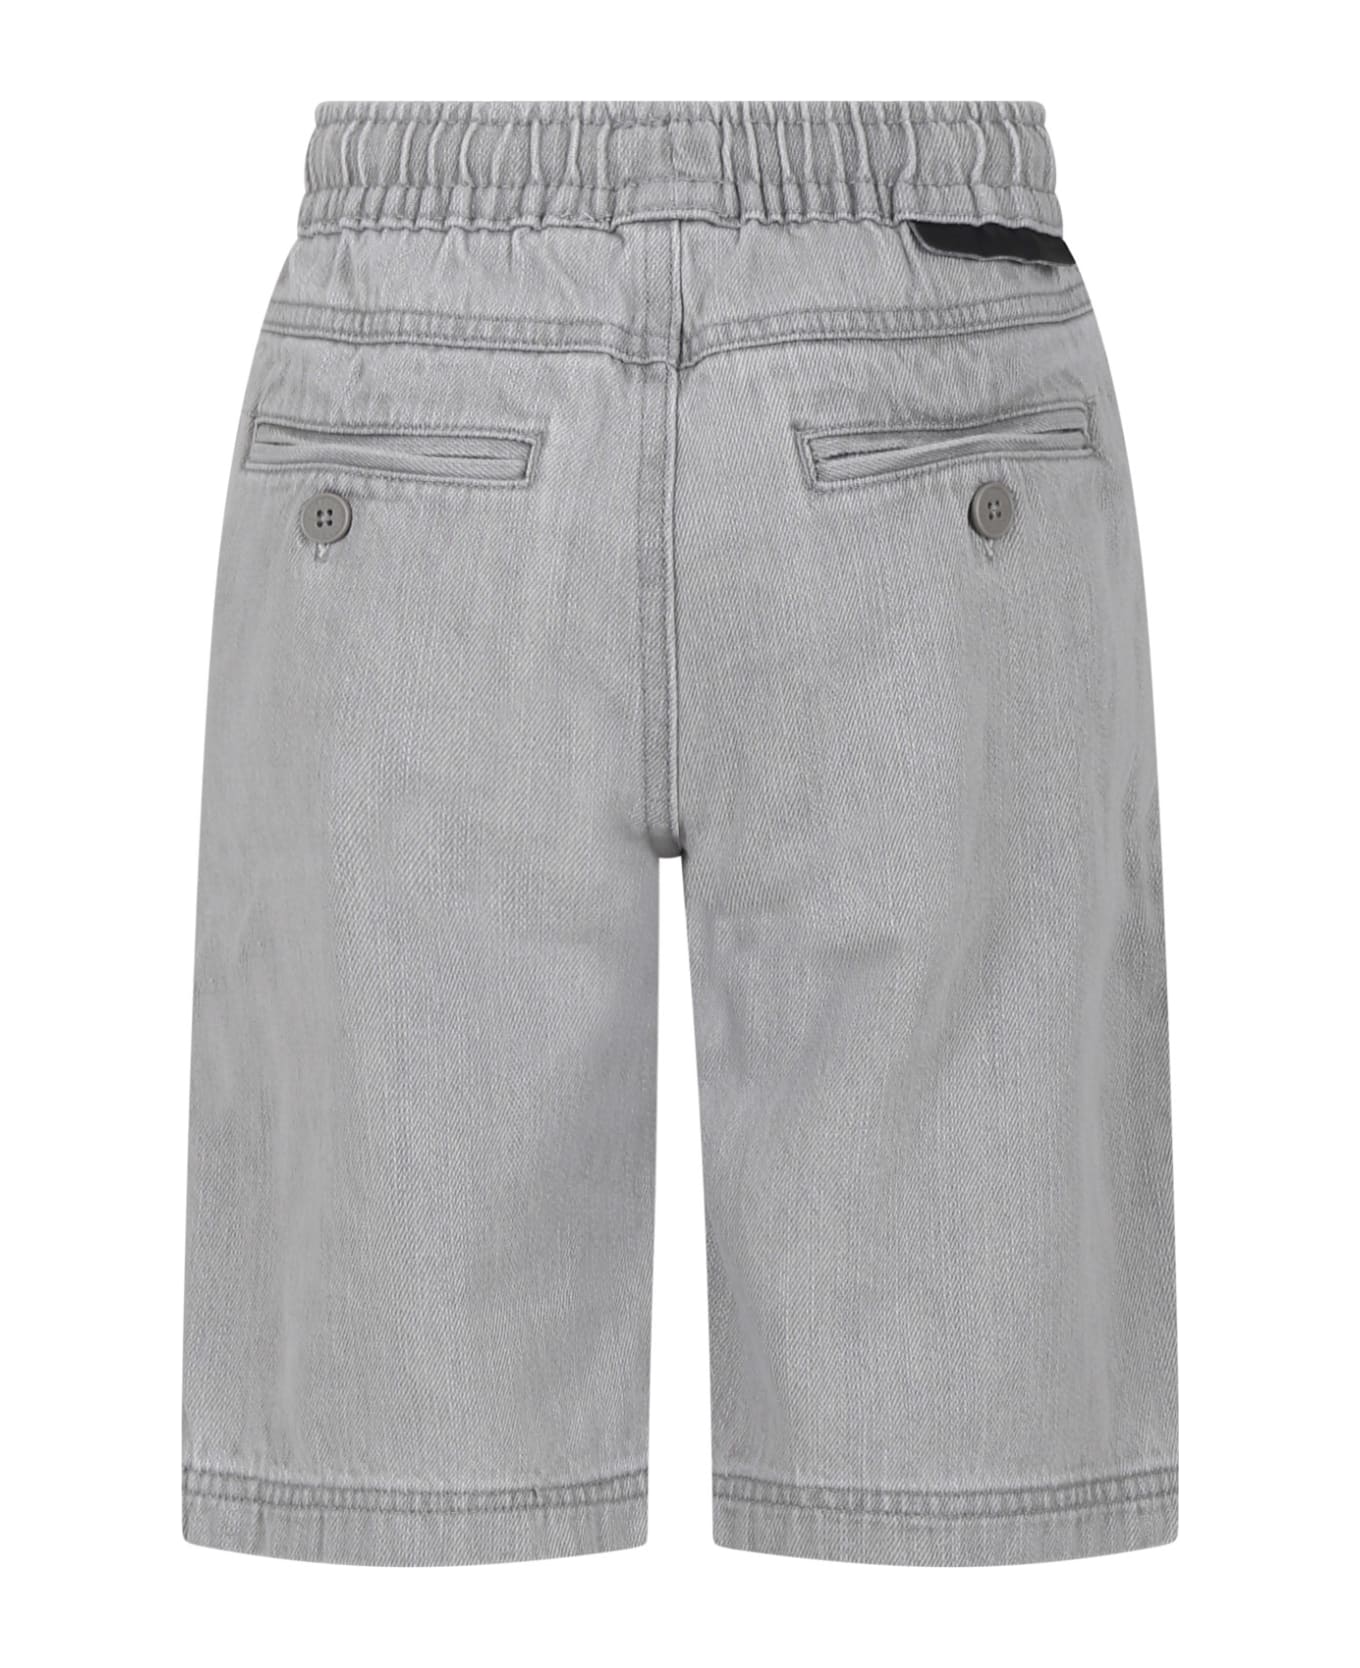 Stella McCartney Kids Gray Casual Shorts For Boy - Grey ボトムス